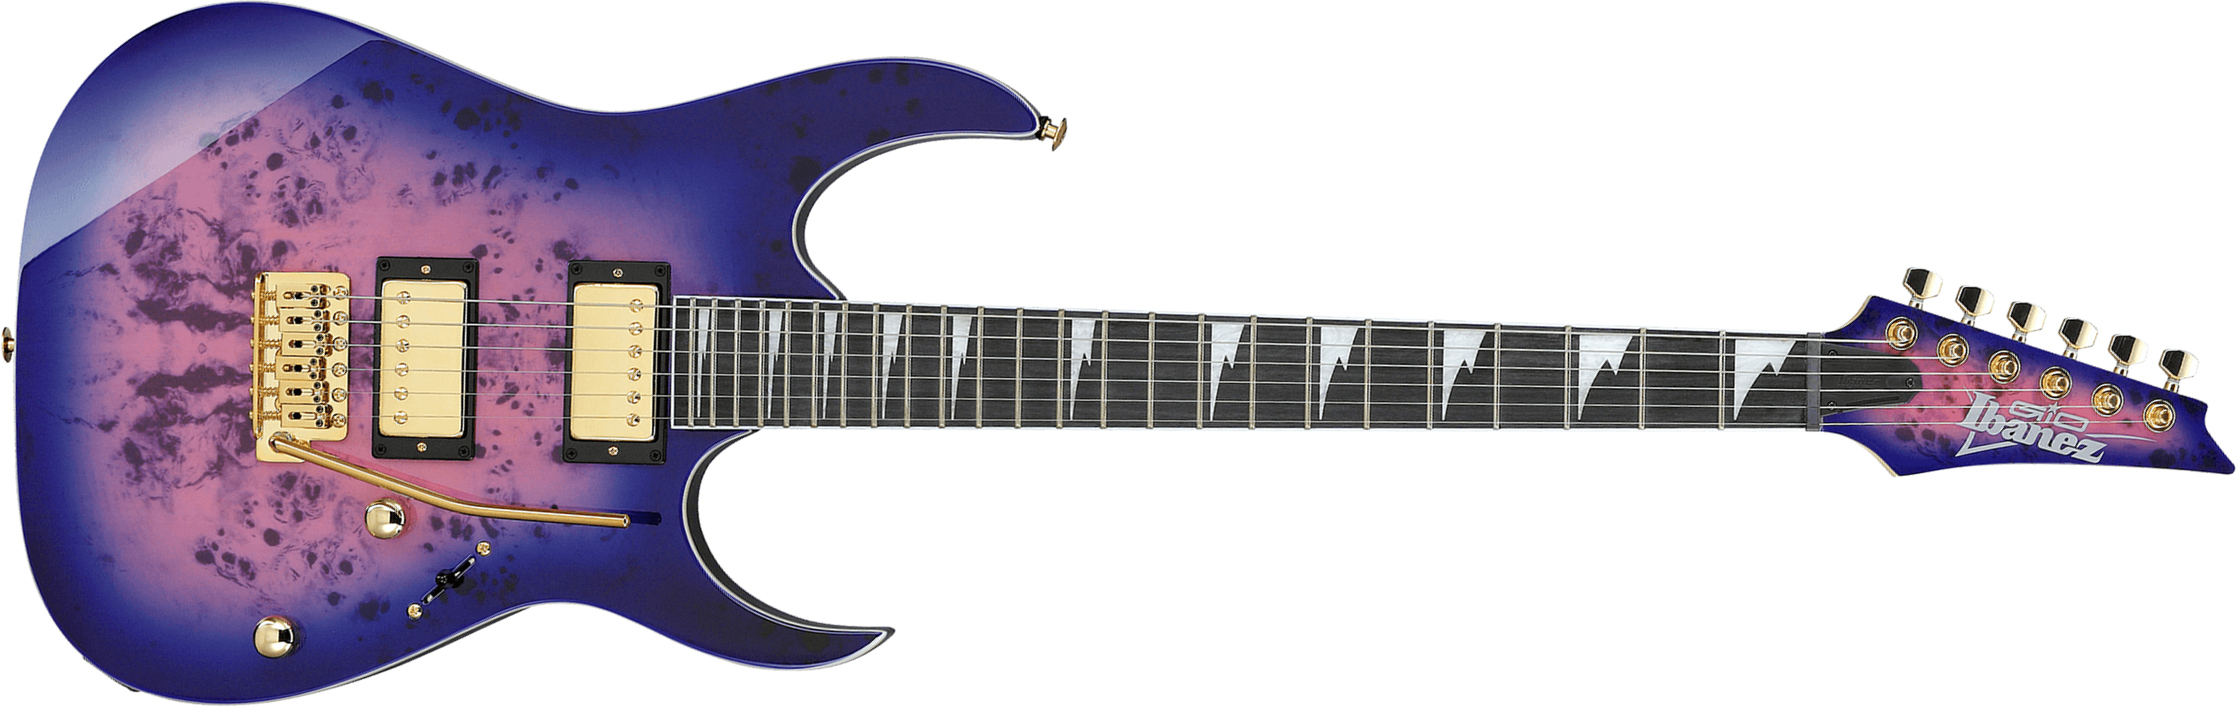 Ibanez Grg220pa Rlb Gio 2h Trem Pur - Royal Purple Burst - Str shape electric guitar - Main picture